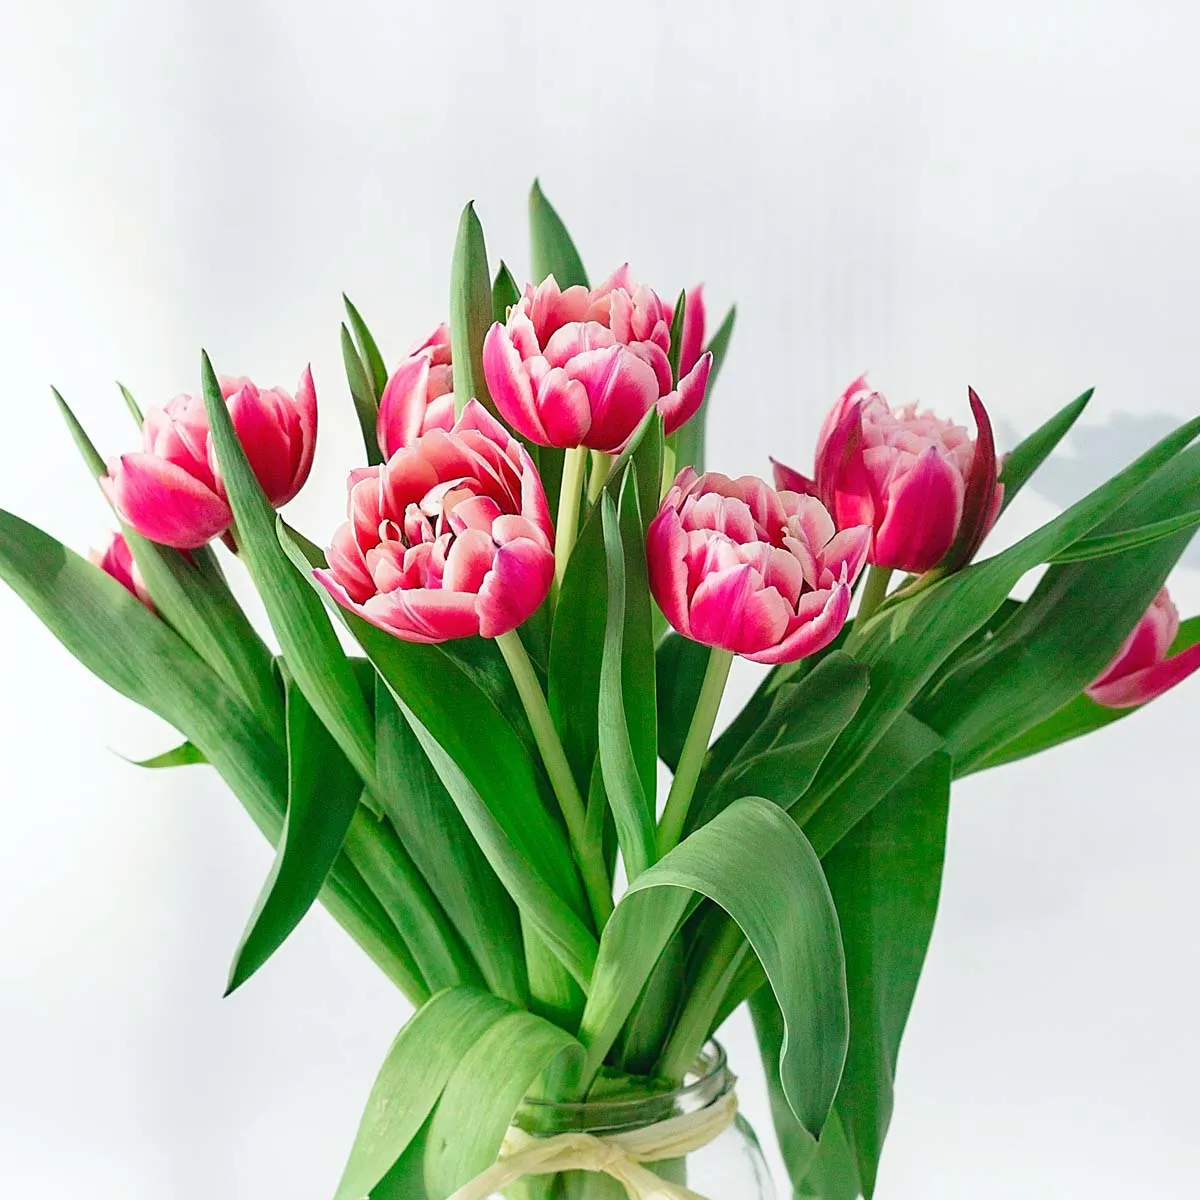 tulips 2